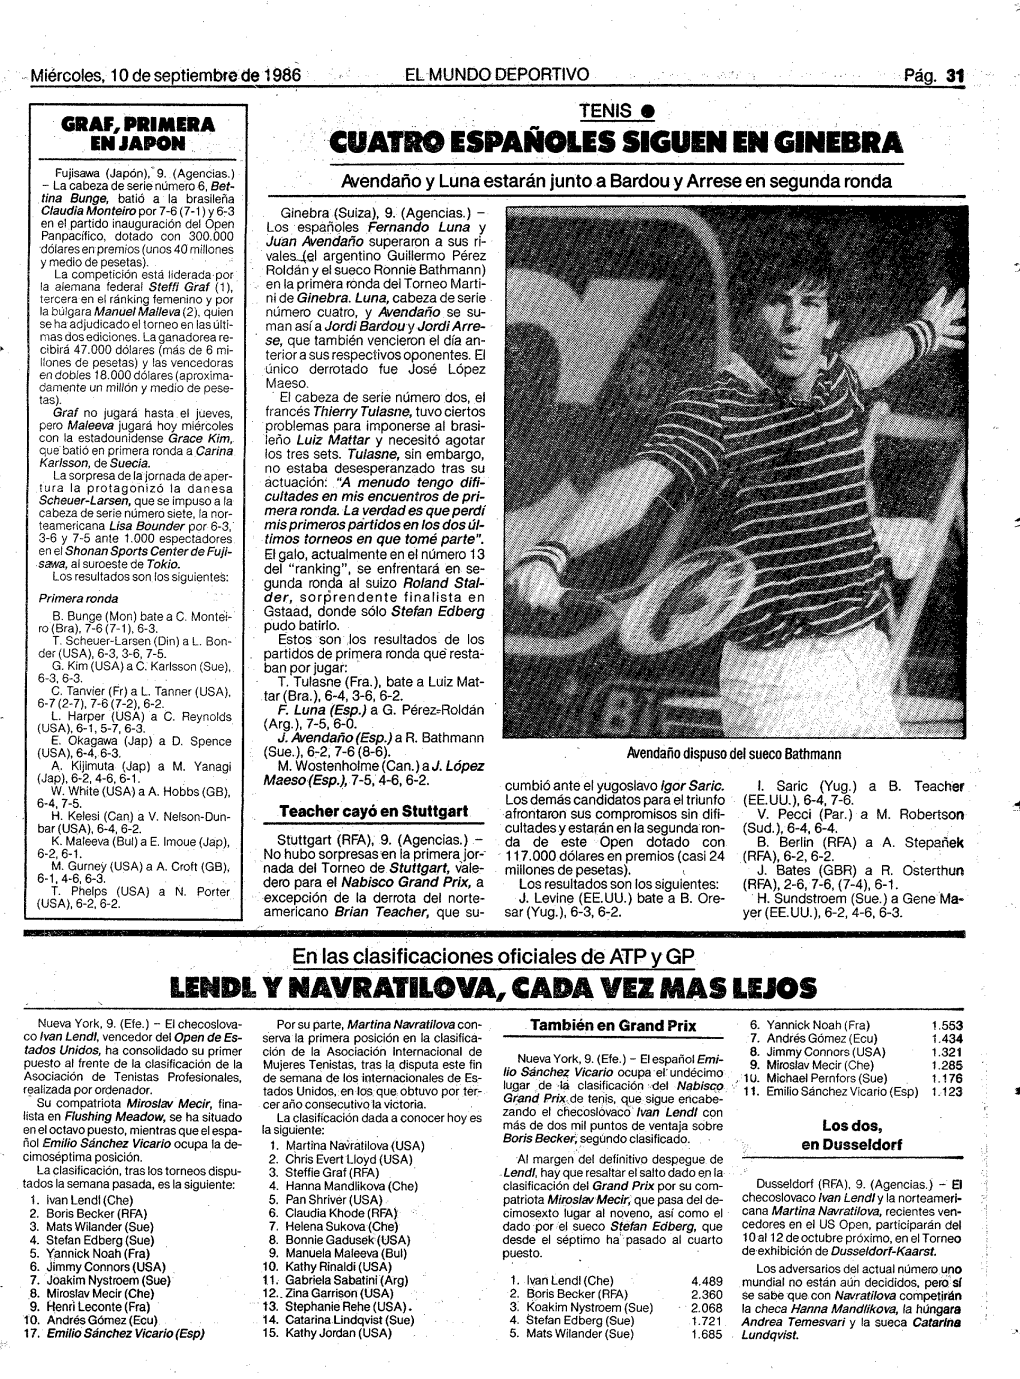 Cuatro Españoles Sigueneñ Ginebra Lendl Y Navratilova